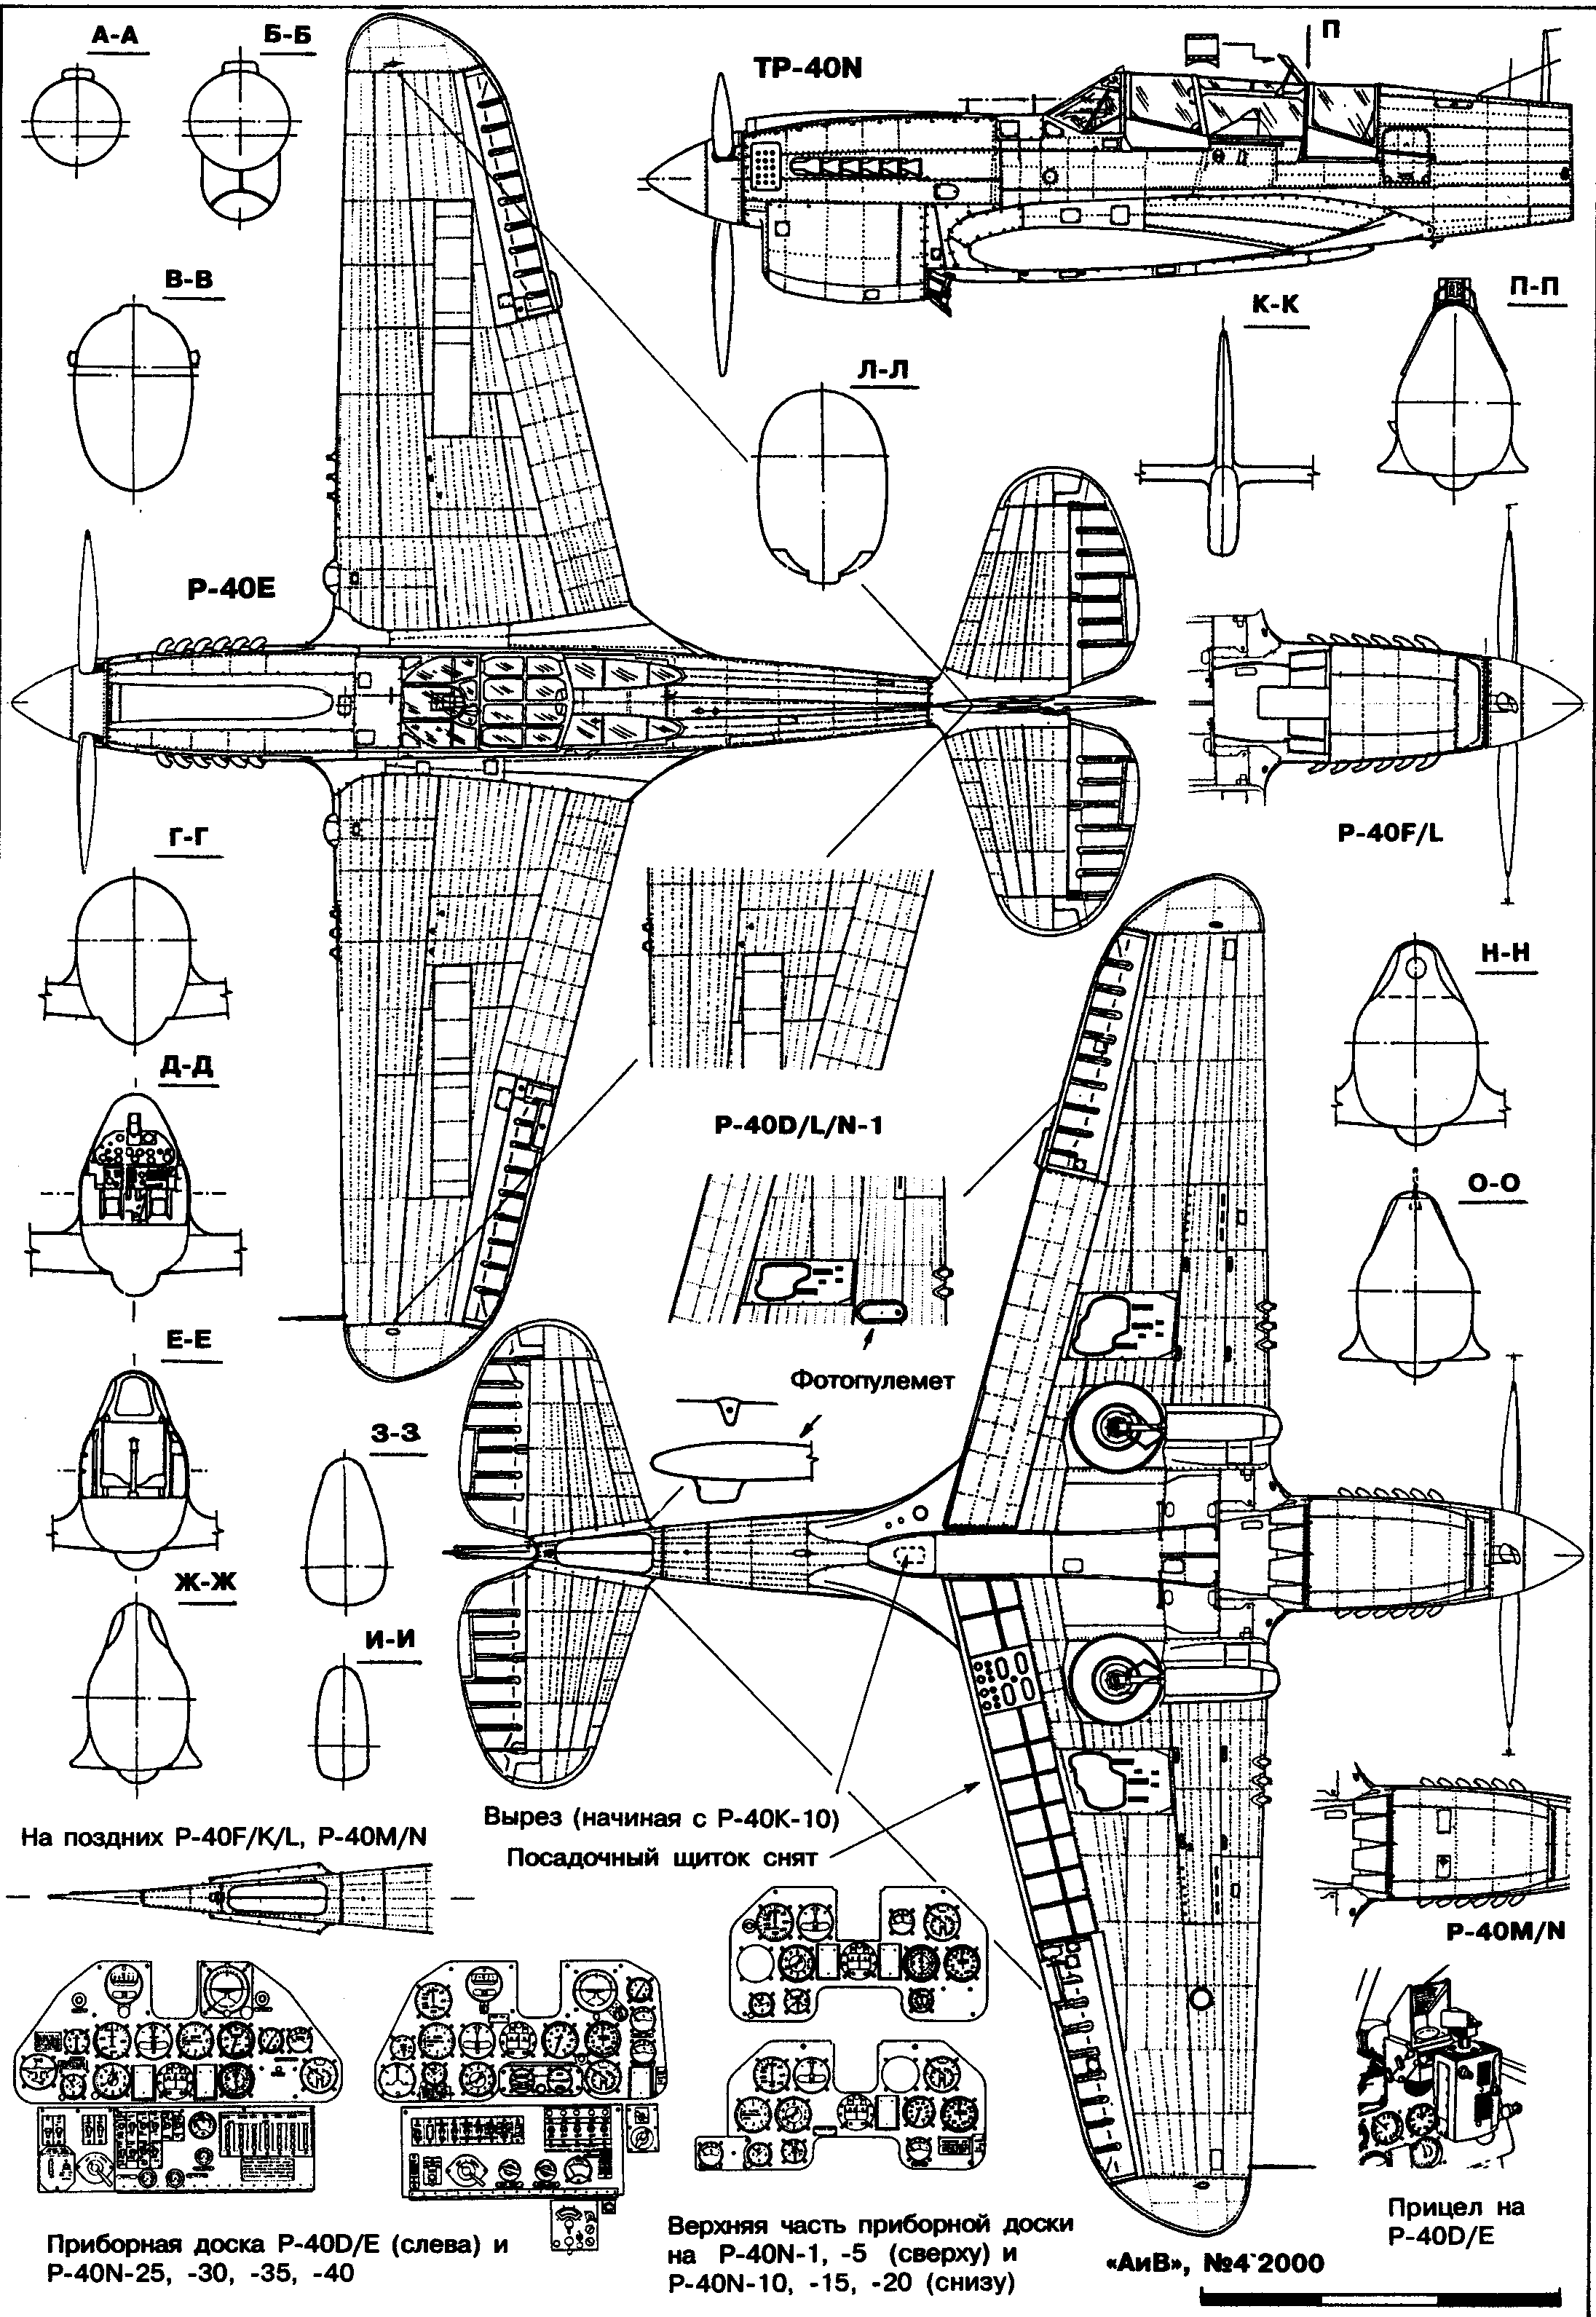 Curtiss P-40 Warhawk blueprint